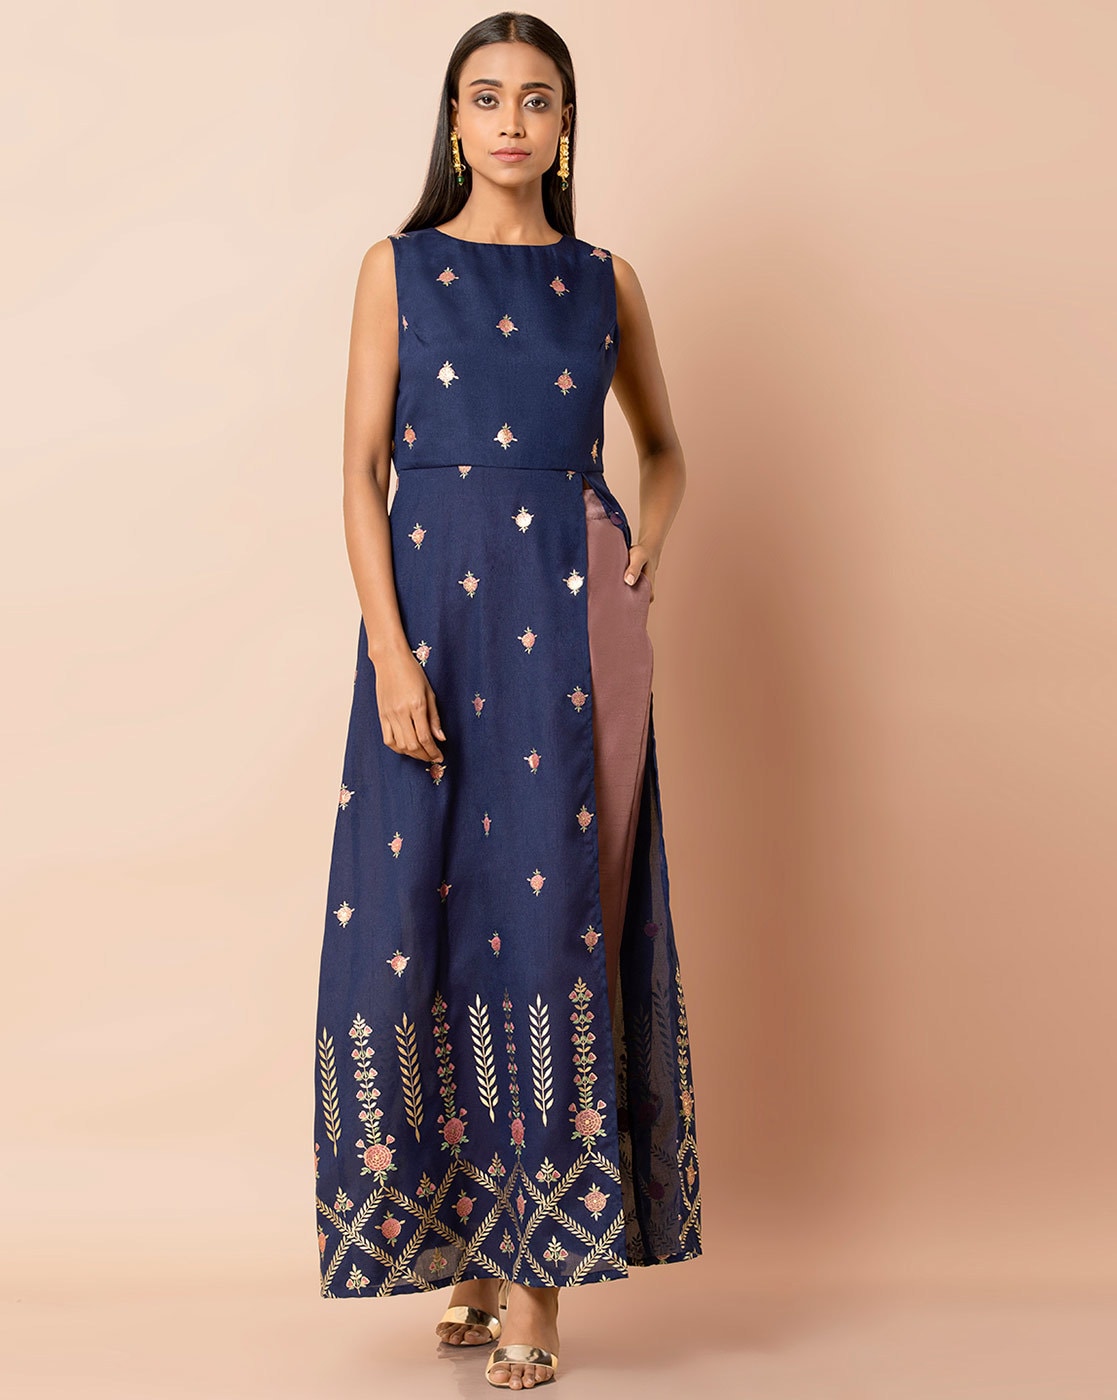 Buy Lemon Printed Modal Rayon Sleeveless Long Kurti Online in India | Long  kurti designs, Kurti designs party wear, Designer dresses indian